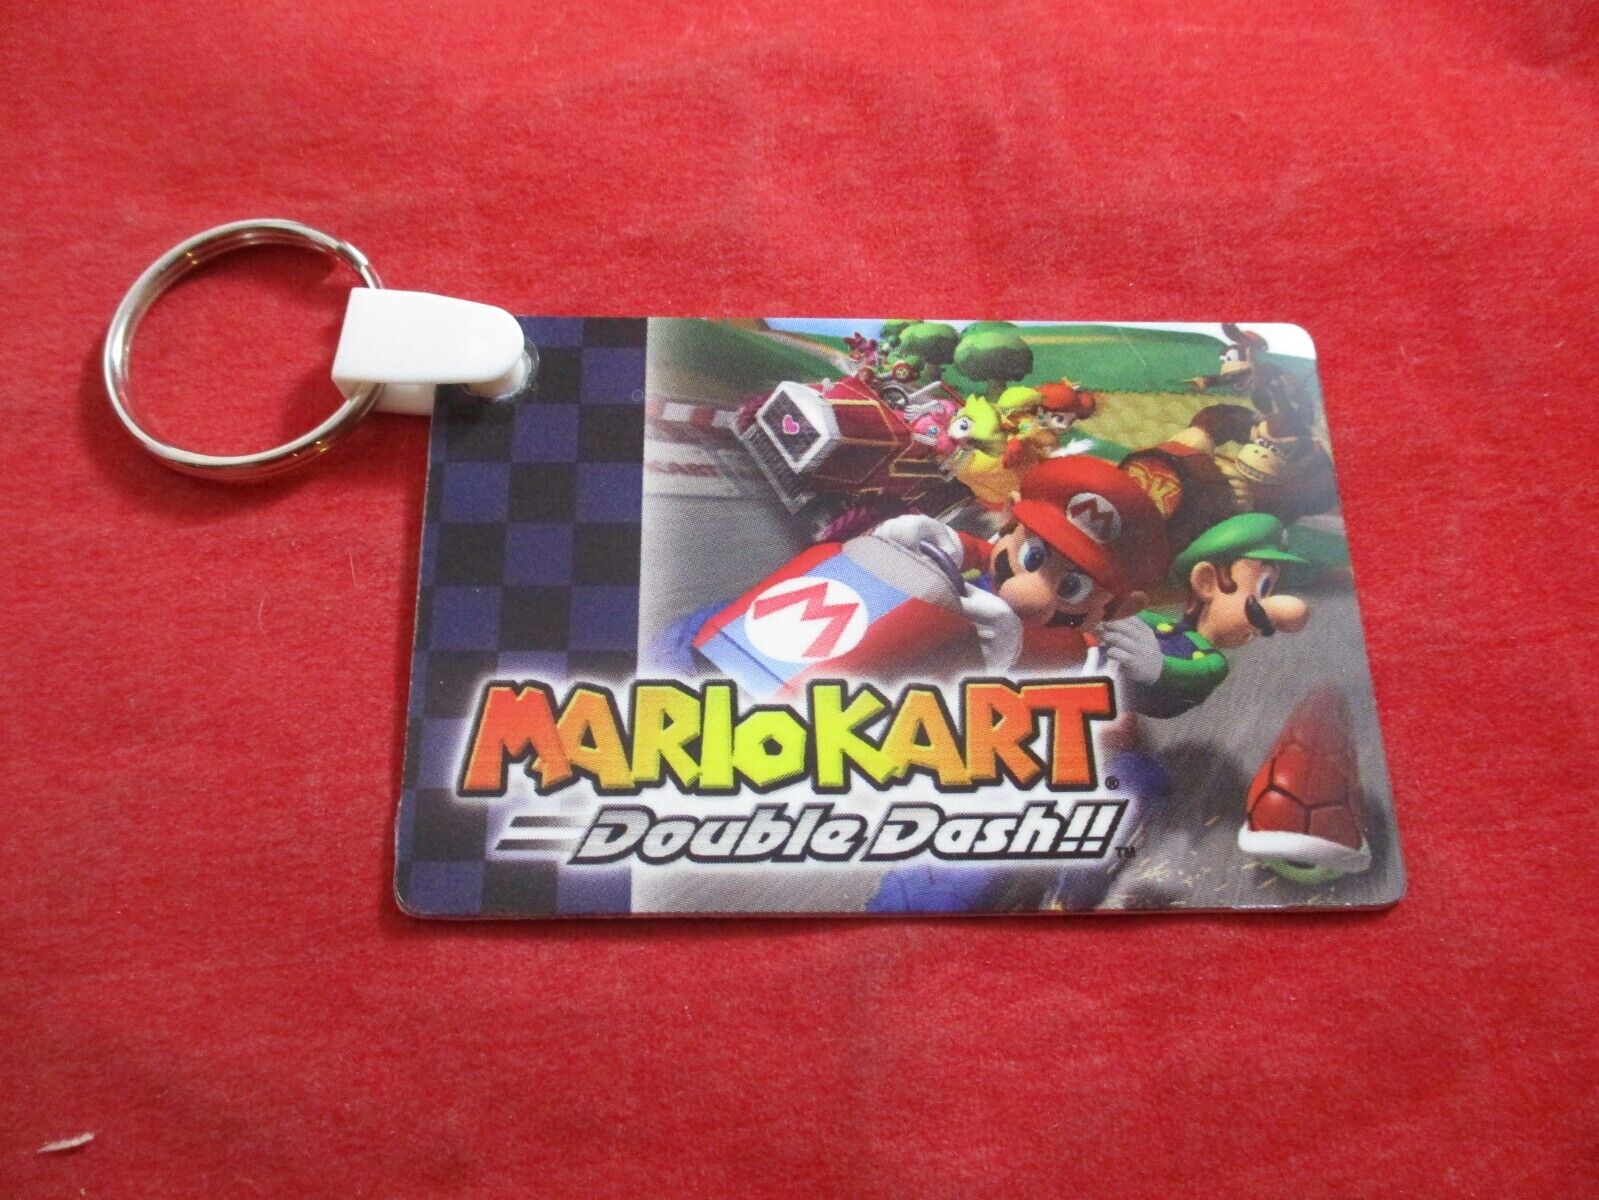 Mario Kart Double Dash Nintendo Gamecube Plastic Game Tip #1 2003 Promo Keychain